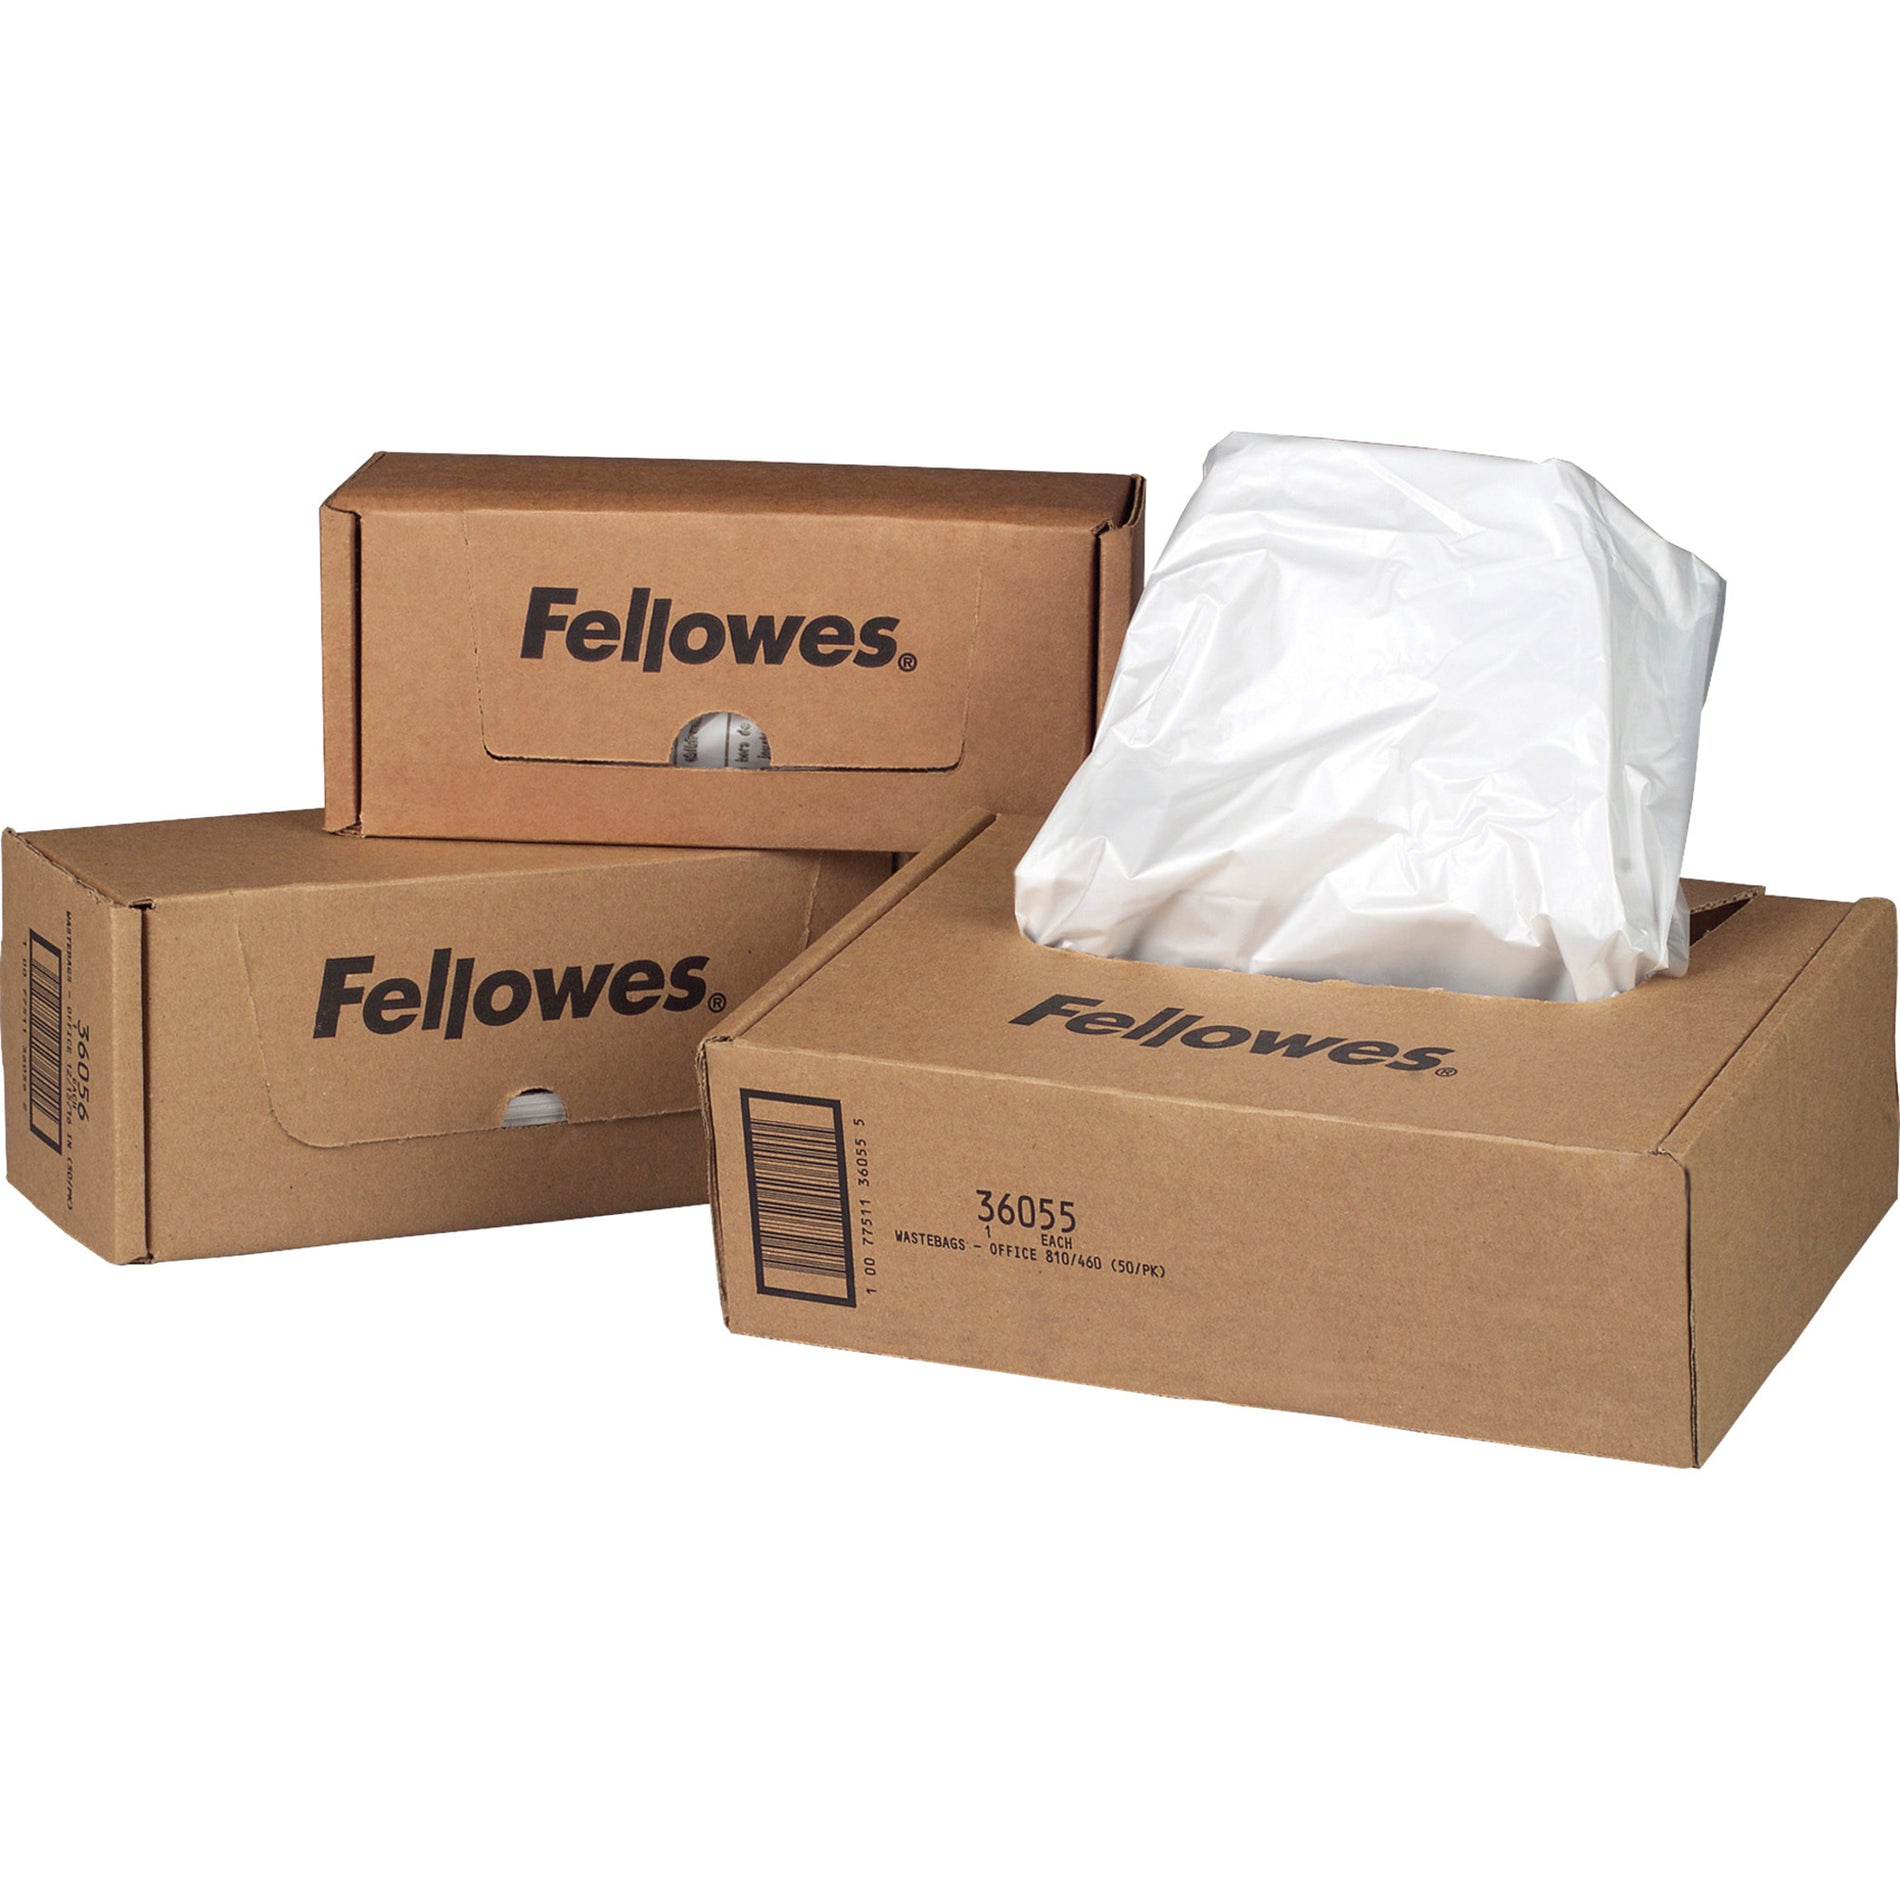 Fellowes 36056 325 Series Shredder Waste Bags, 50/Box